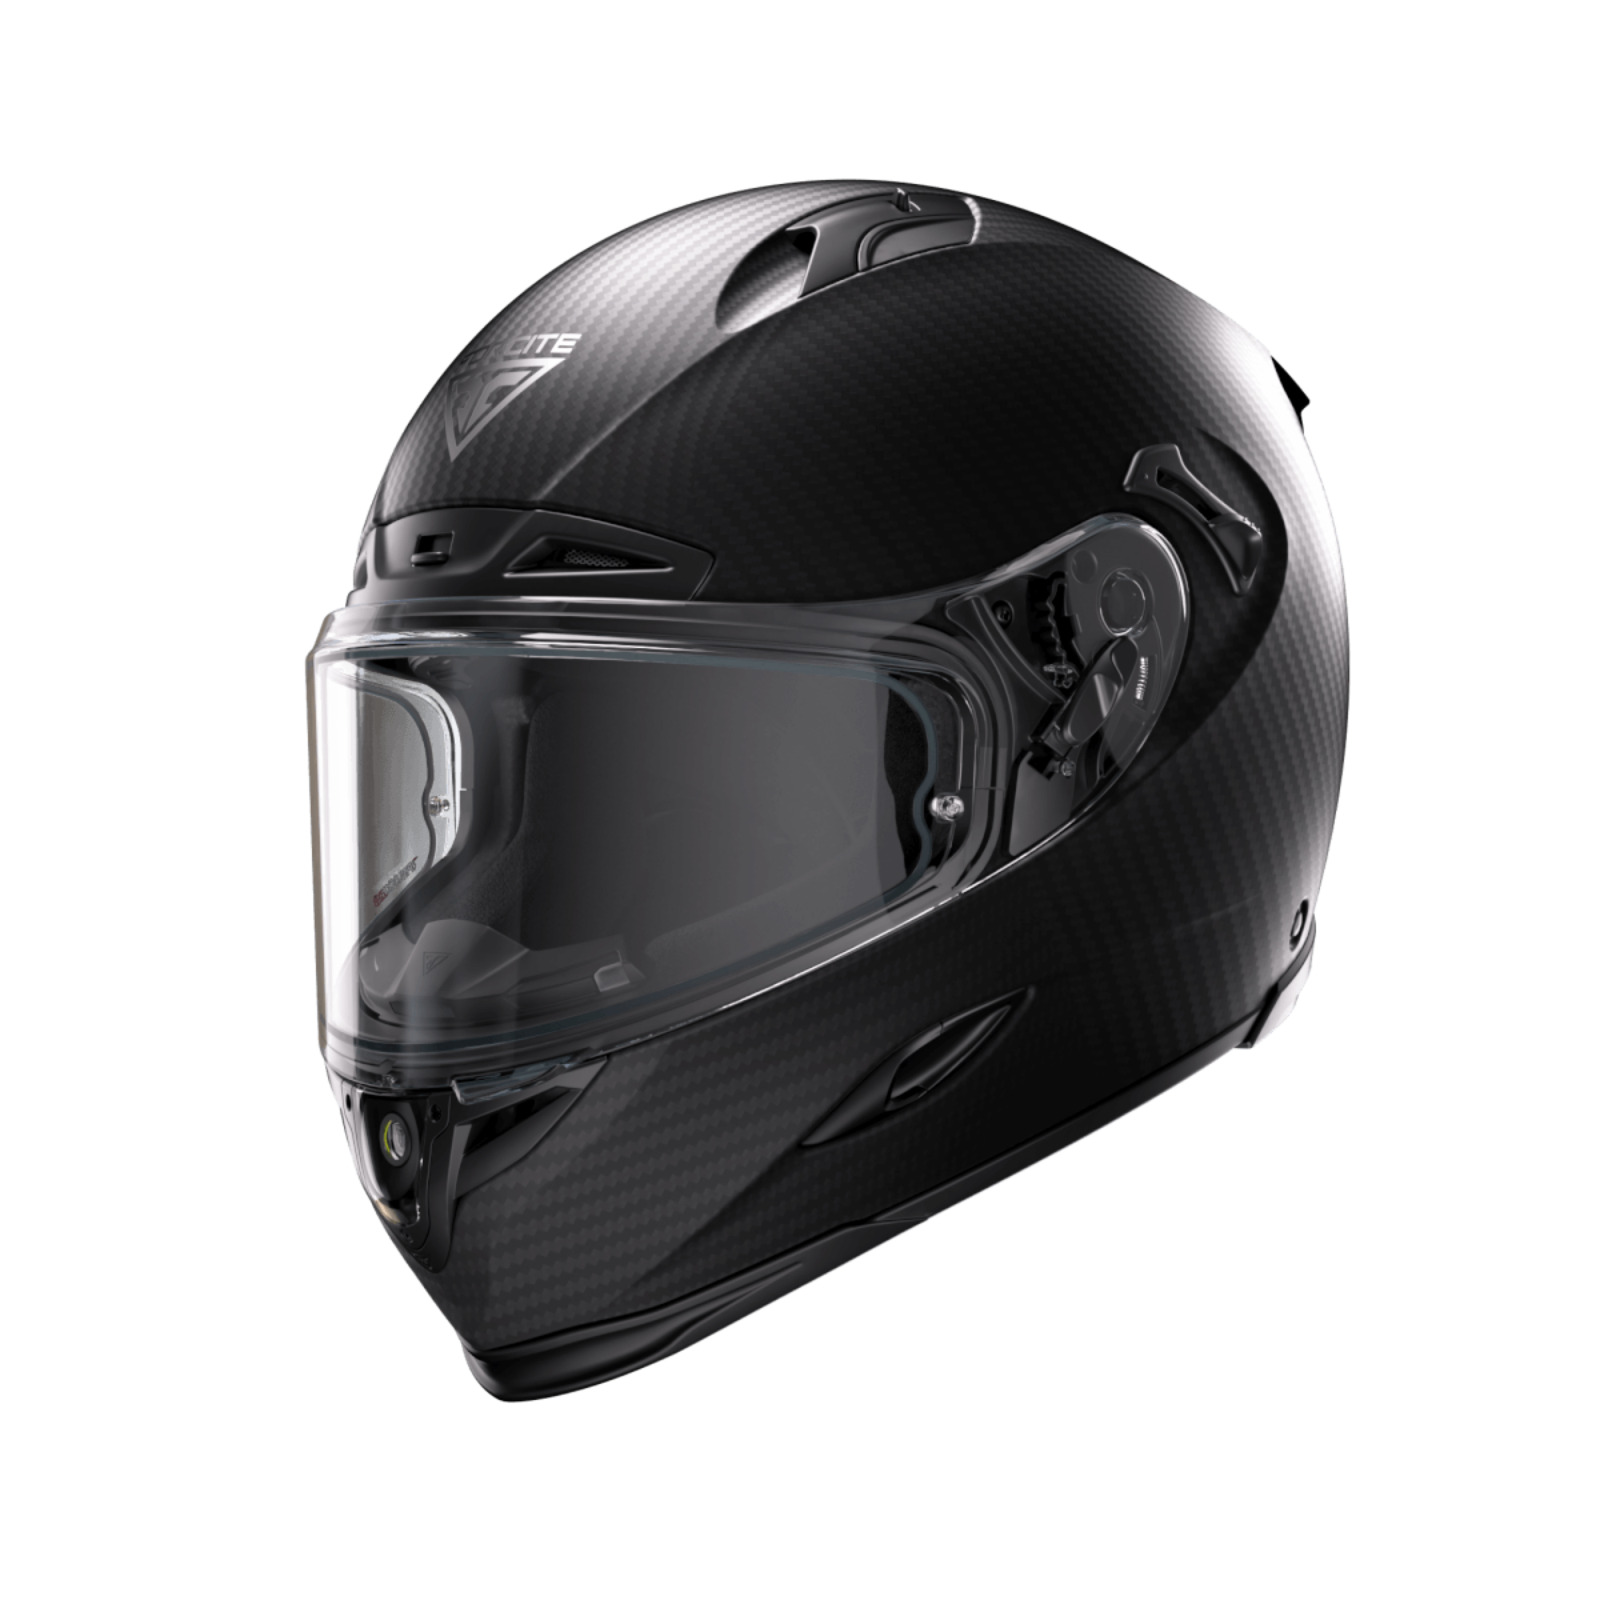 Forcite MK1S Carbon Fiber Advanced Smart Helmet - Matte Black - New - Size XL